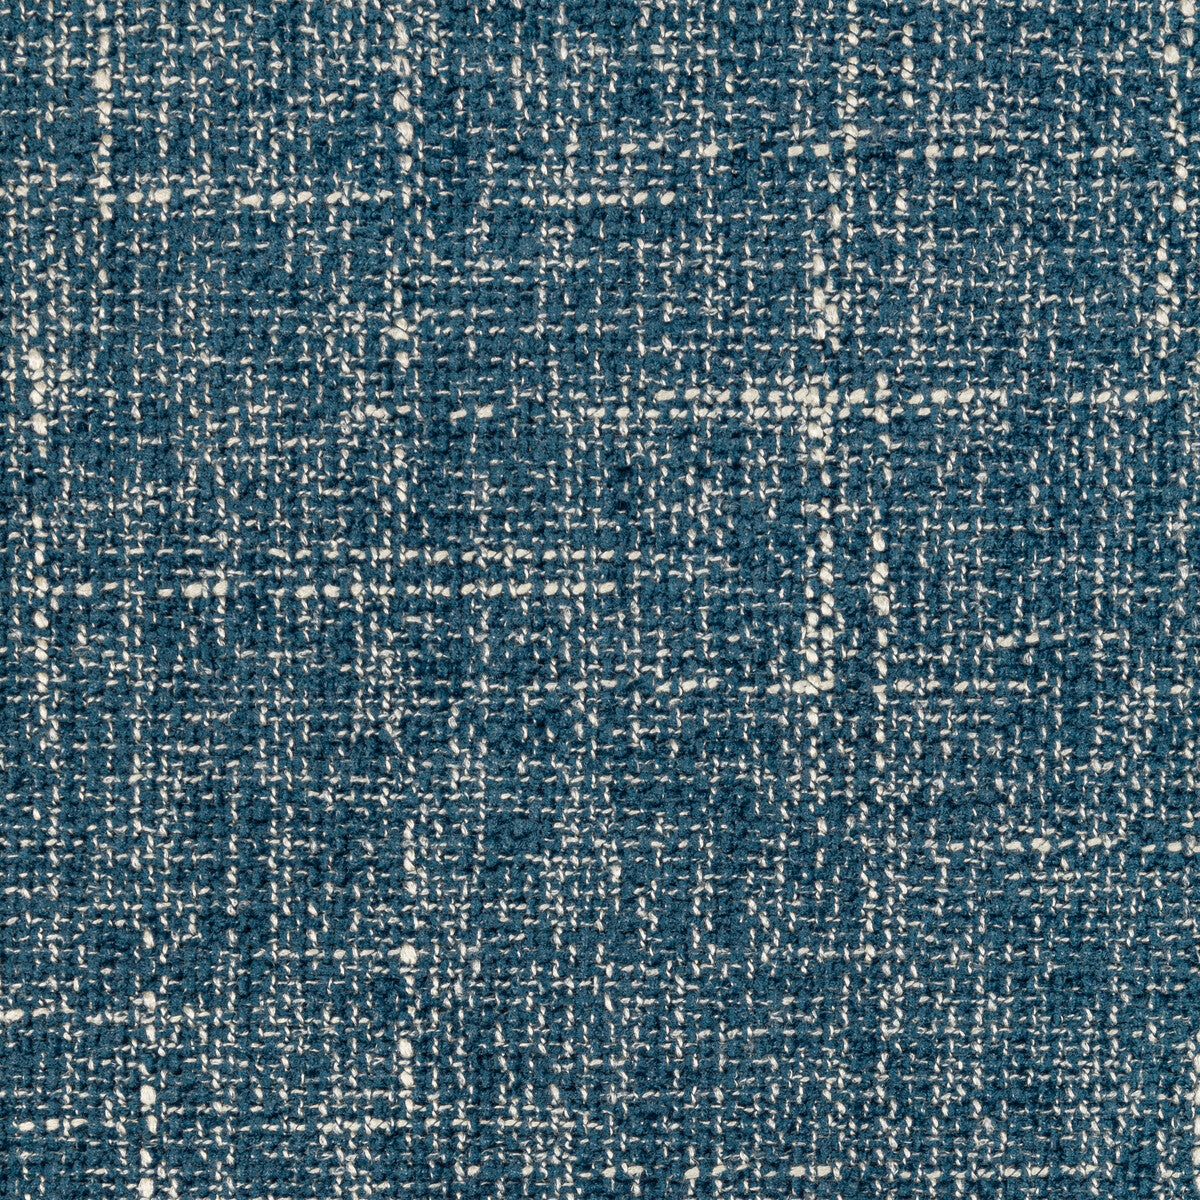 Kravet Smart fabric in 36579-516 color - pattern 36579.516.0 - by Kravet Smart in the Performance Kravetarmor collection